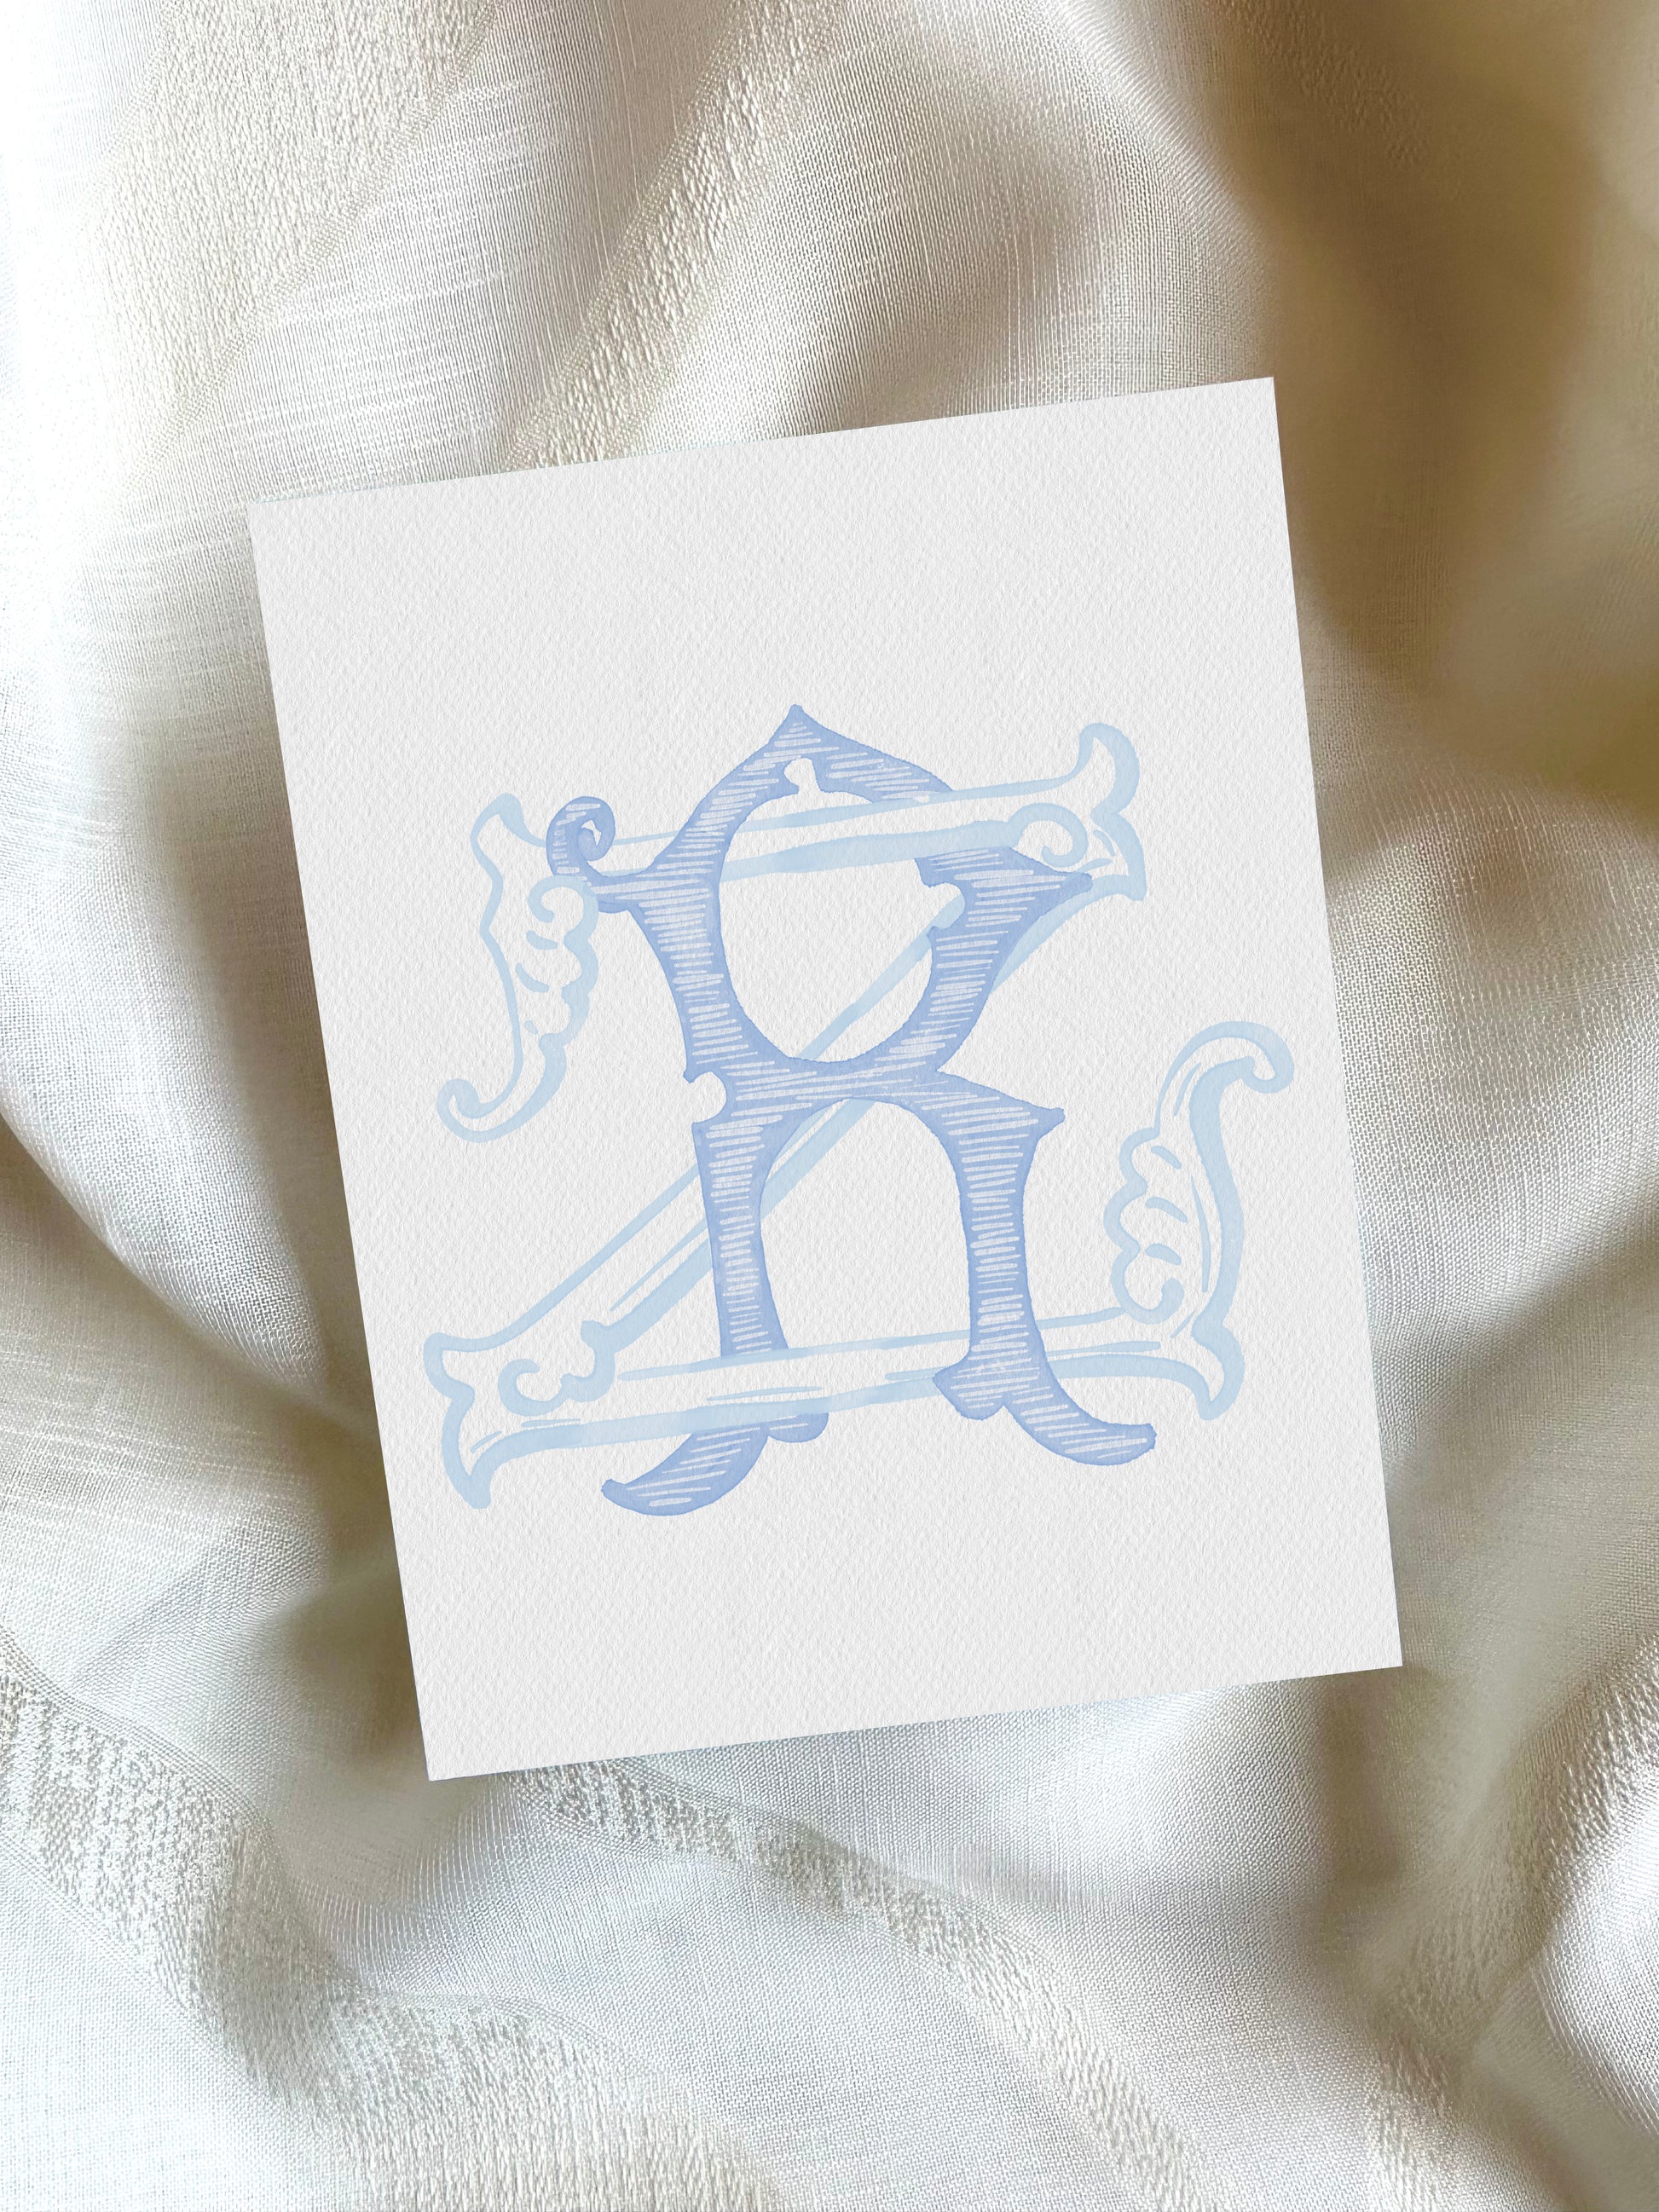 2 Letter Monogram with Letters RZ ZR | Digital Download - Wedding Monogram SVG, Personal Logo, Wedding Logo for Wedding Invitations The Wedding Crest Lab